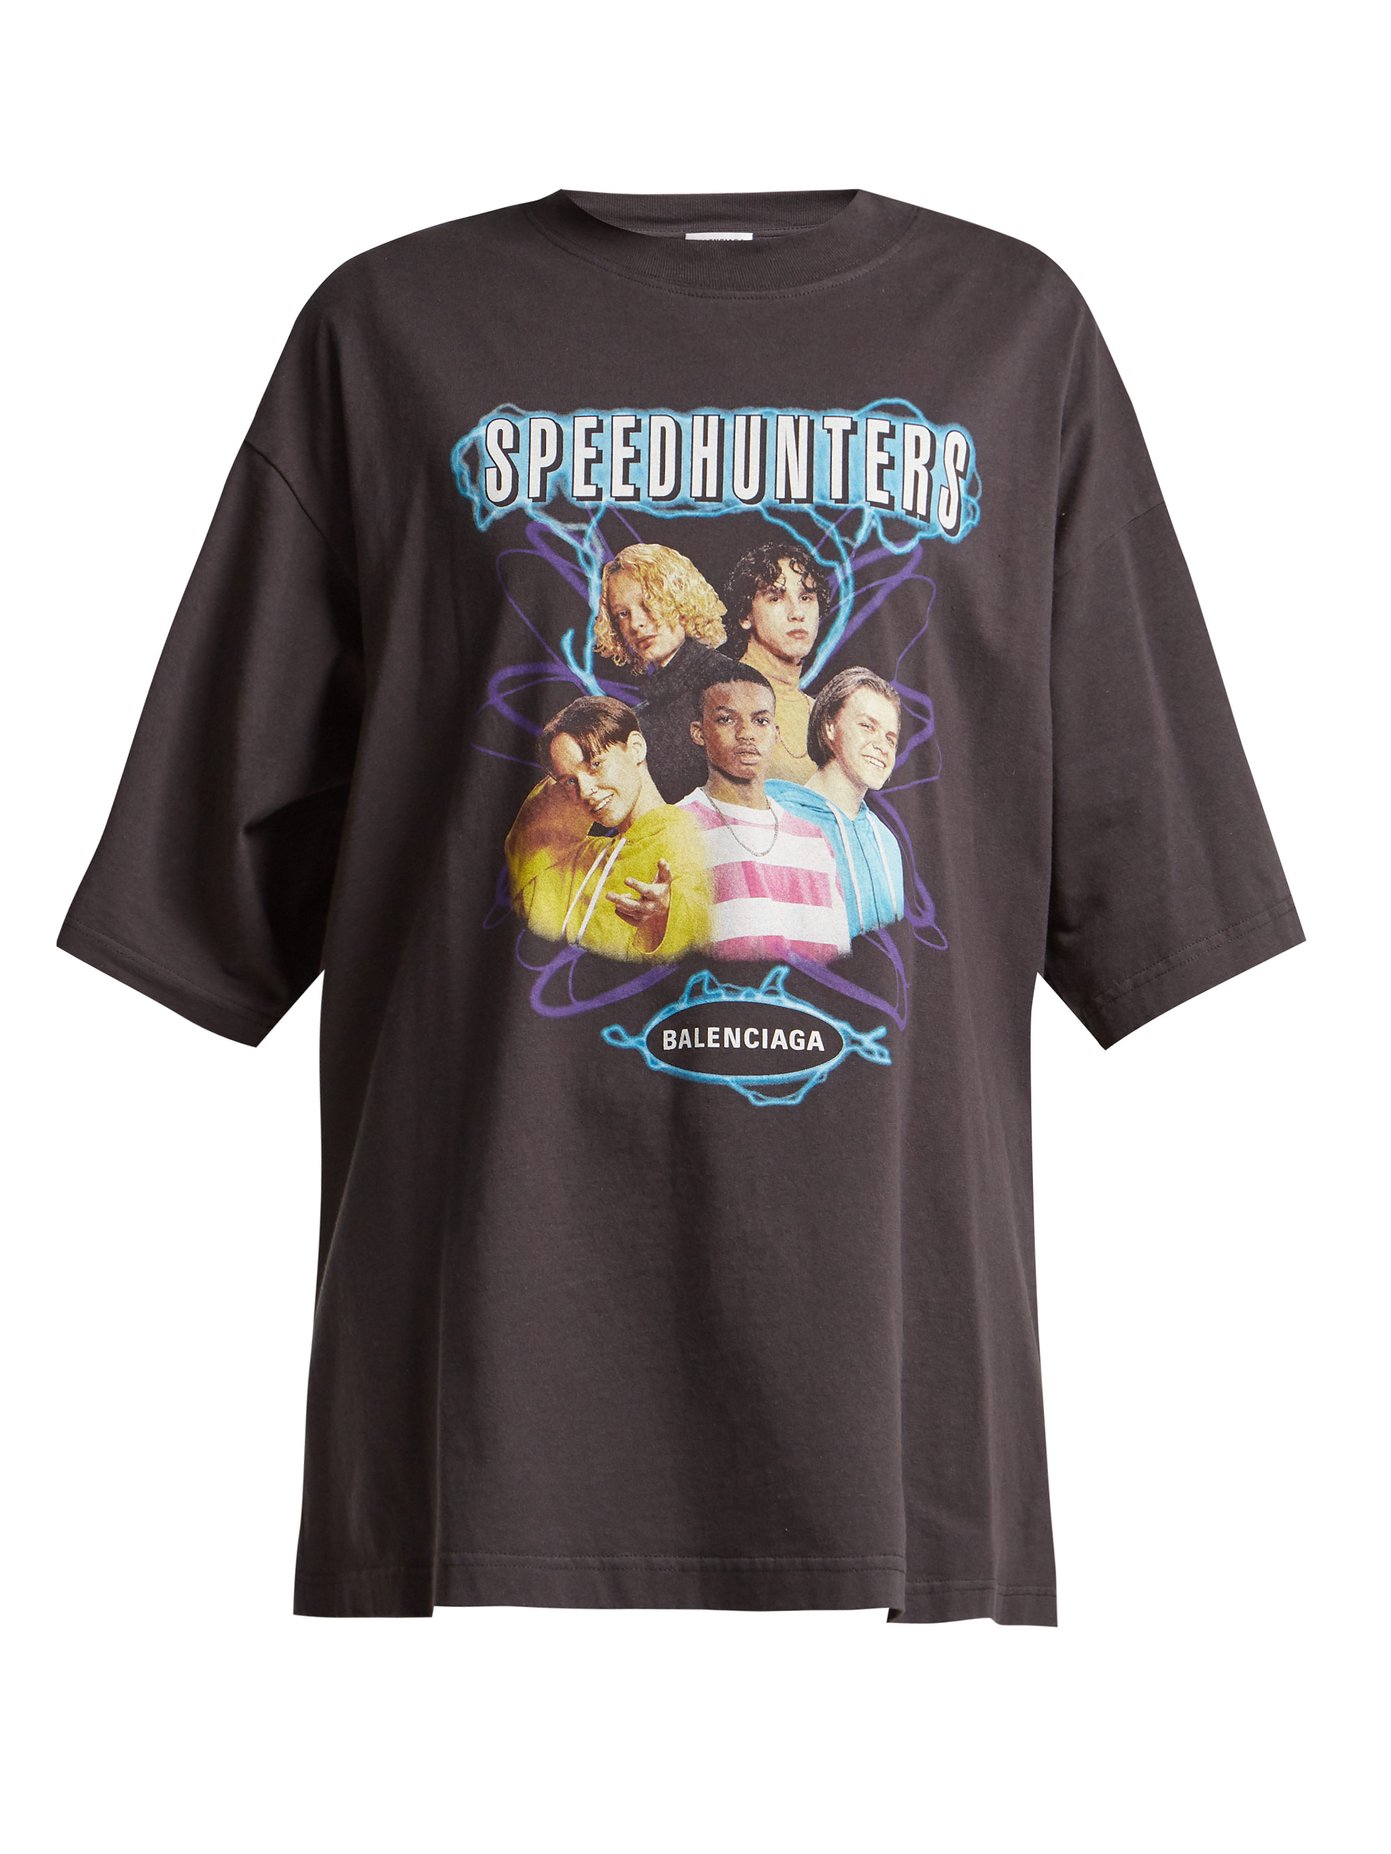 Telégrafo navegación Verter Balenciaga Speedhunters T Shirt Hotsell, 51% OFF | www.colegiogamarra.com